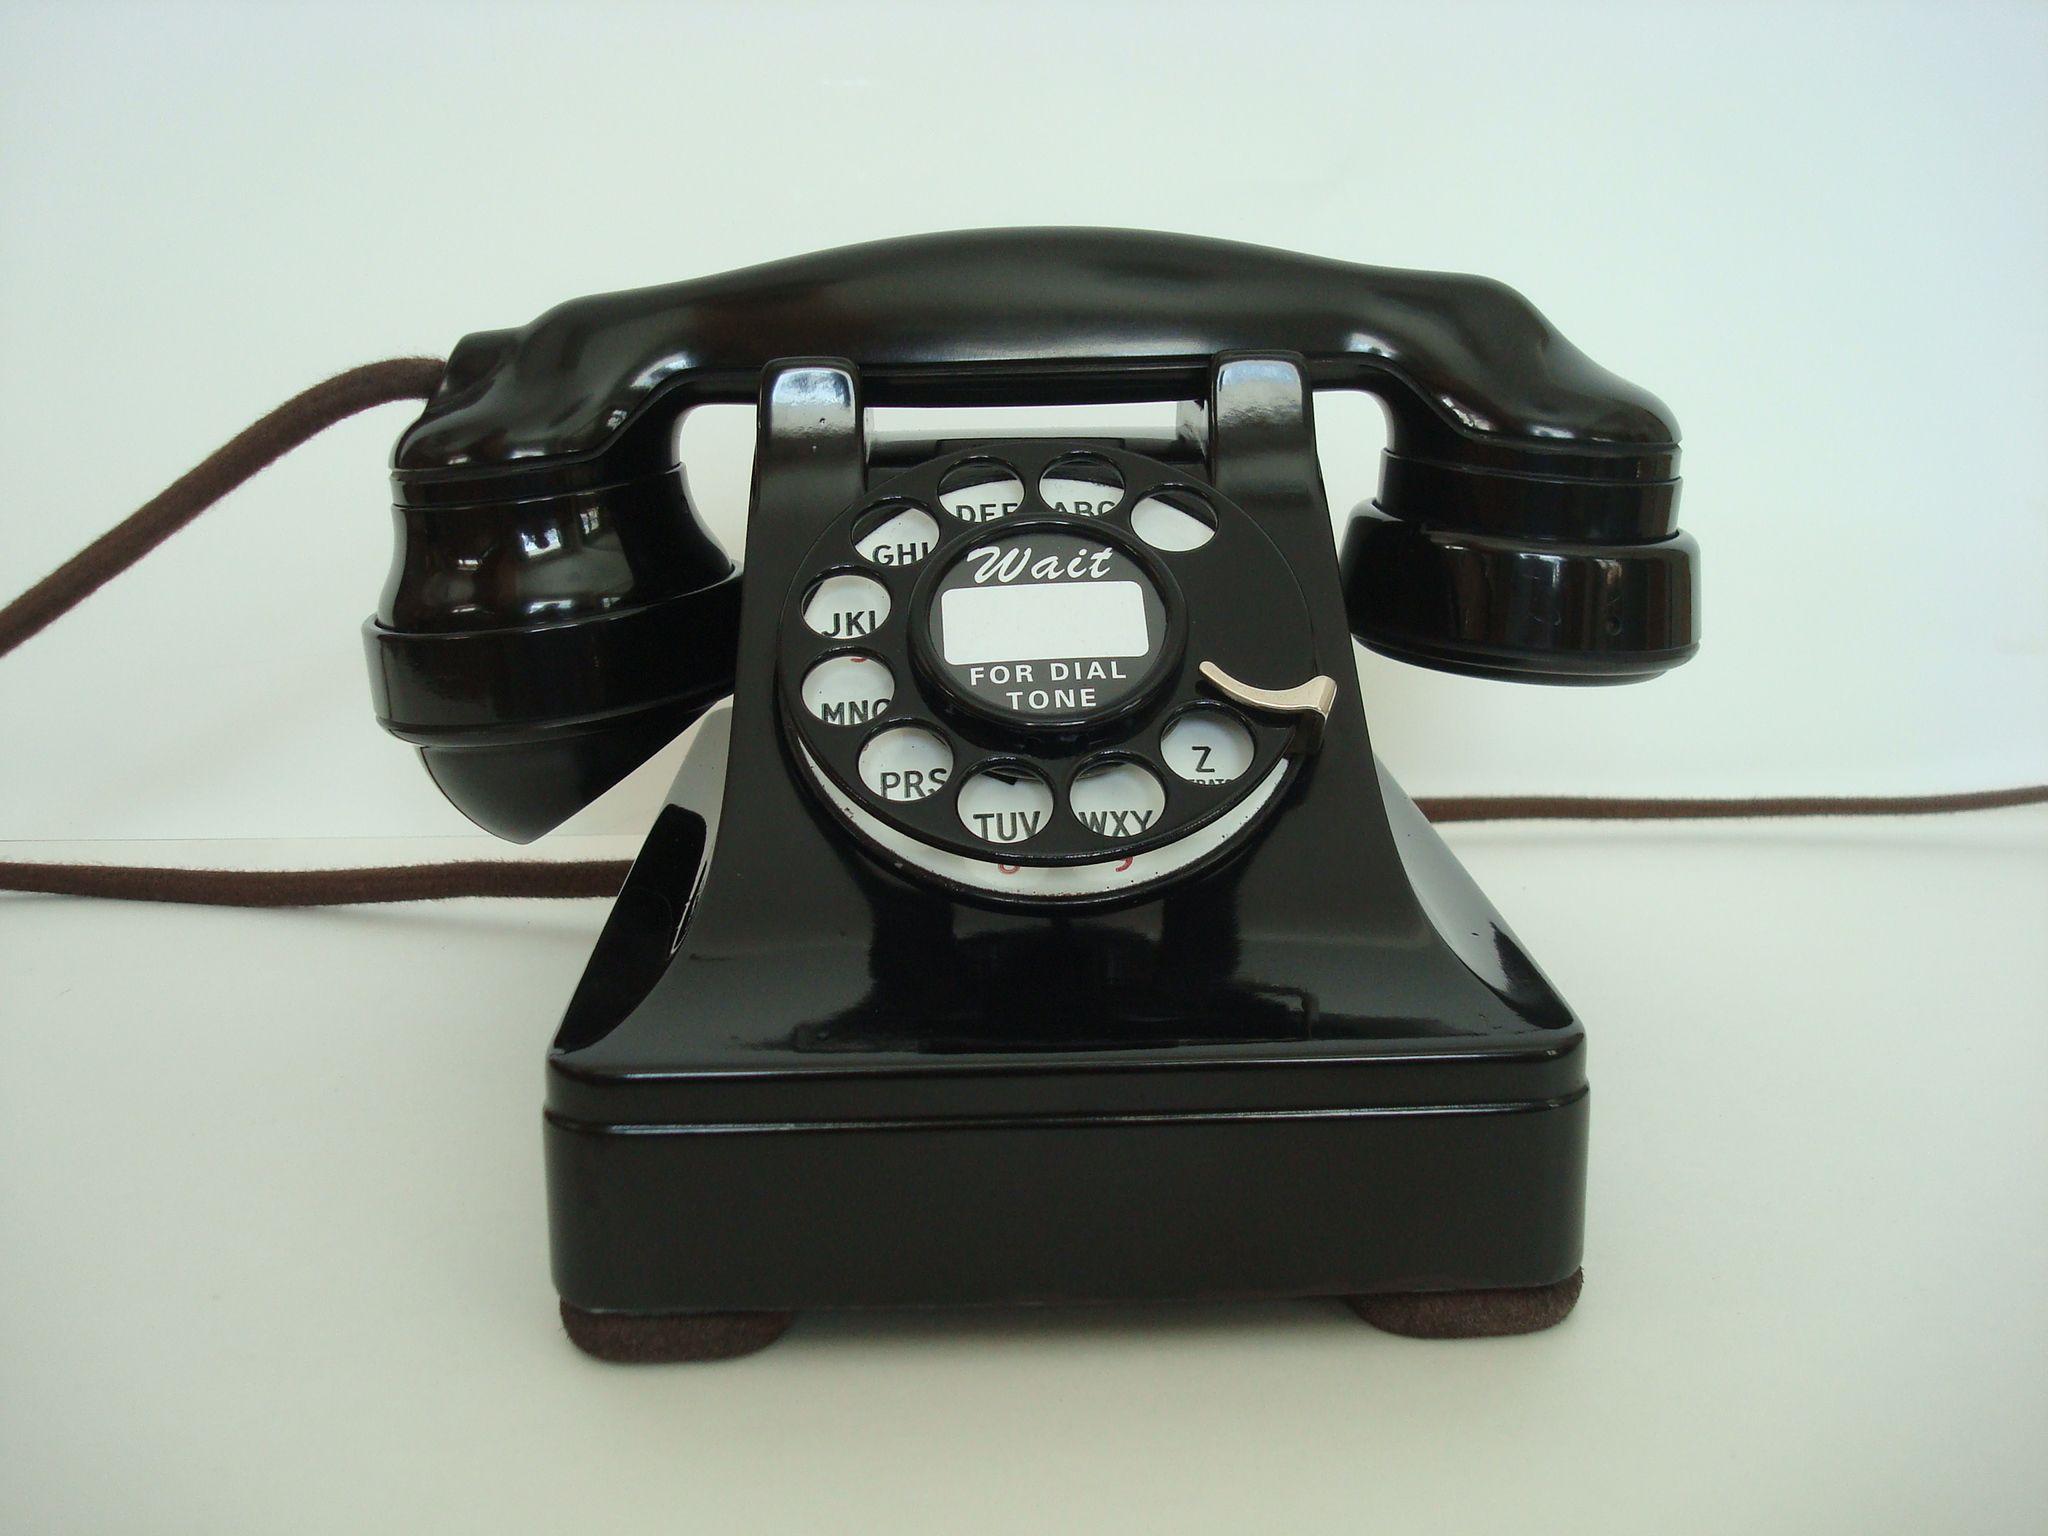 Включи звук старый телефон. Старый телефон. Старинный телефонный аппарат. Винтажный телефонный аппарат.